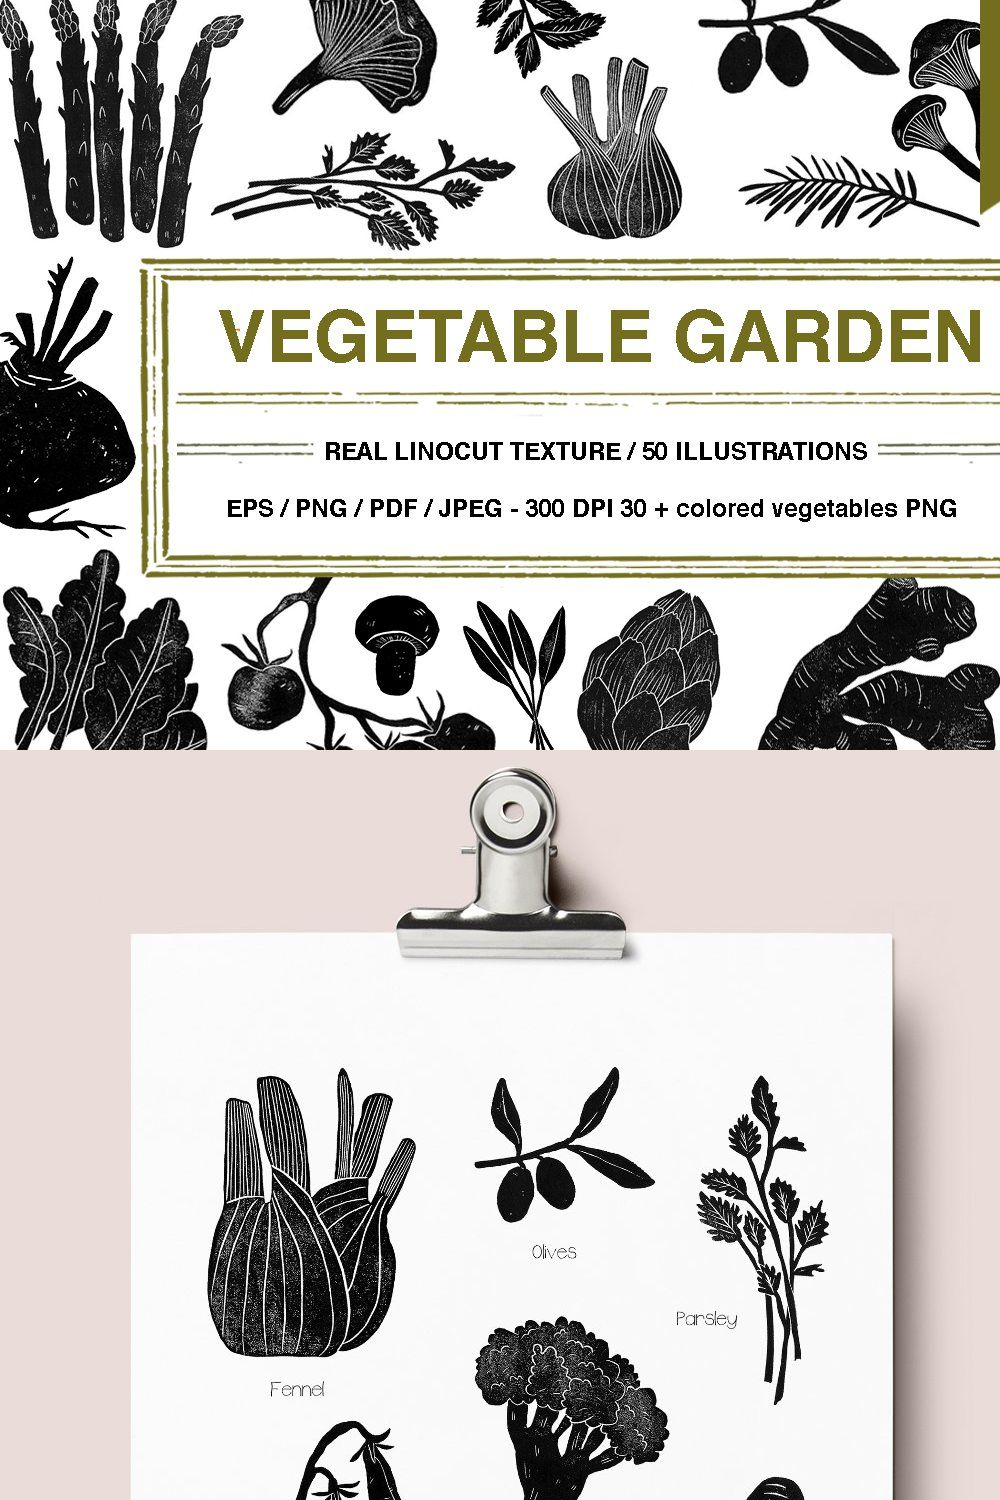 Vegetable garden pinterest preview image.